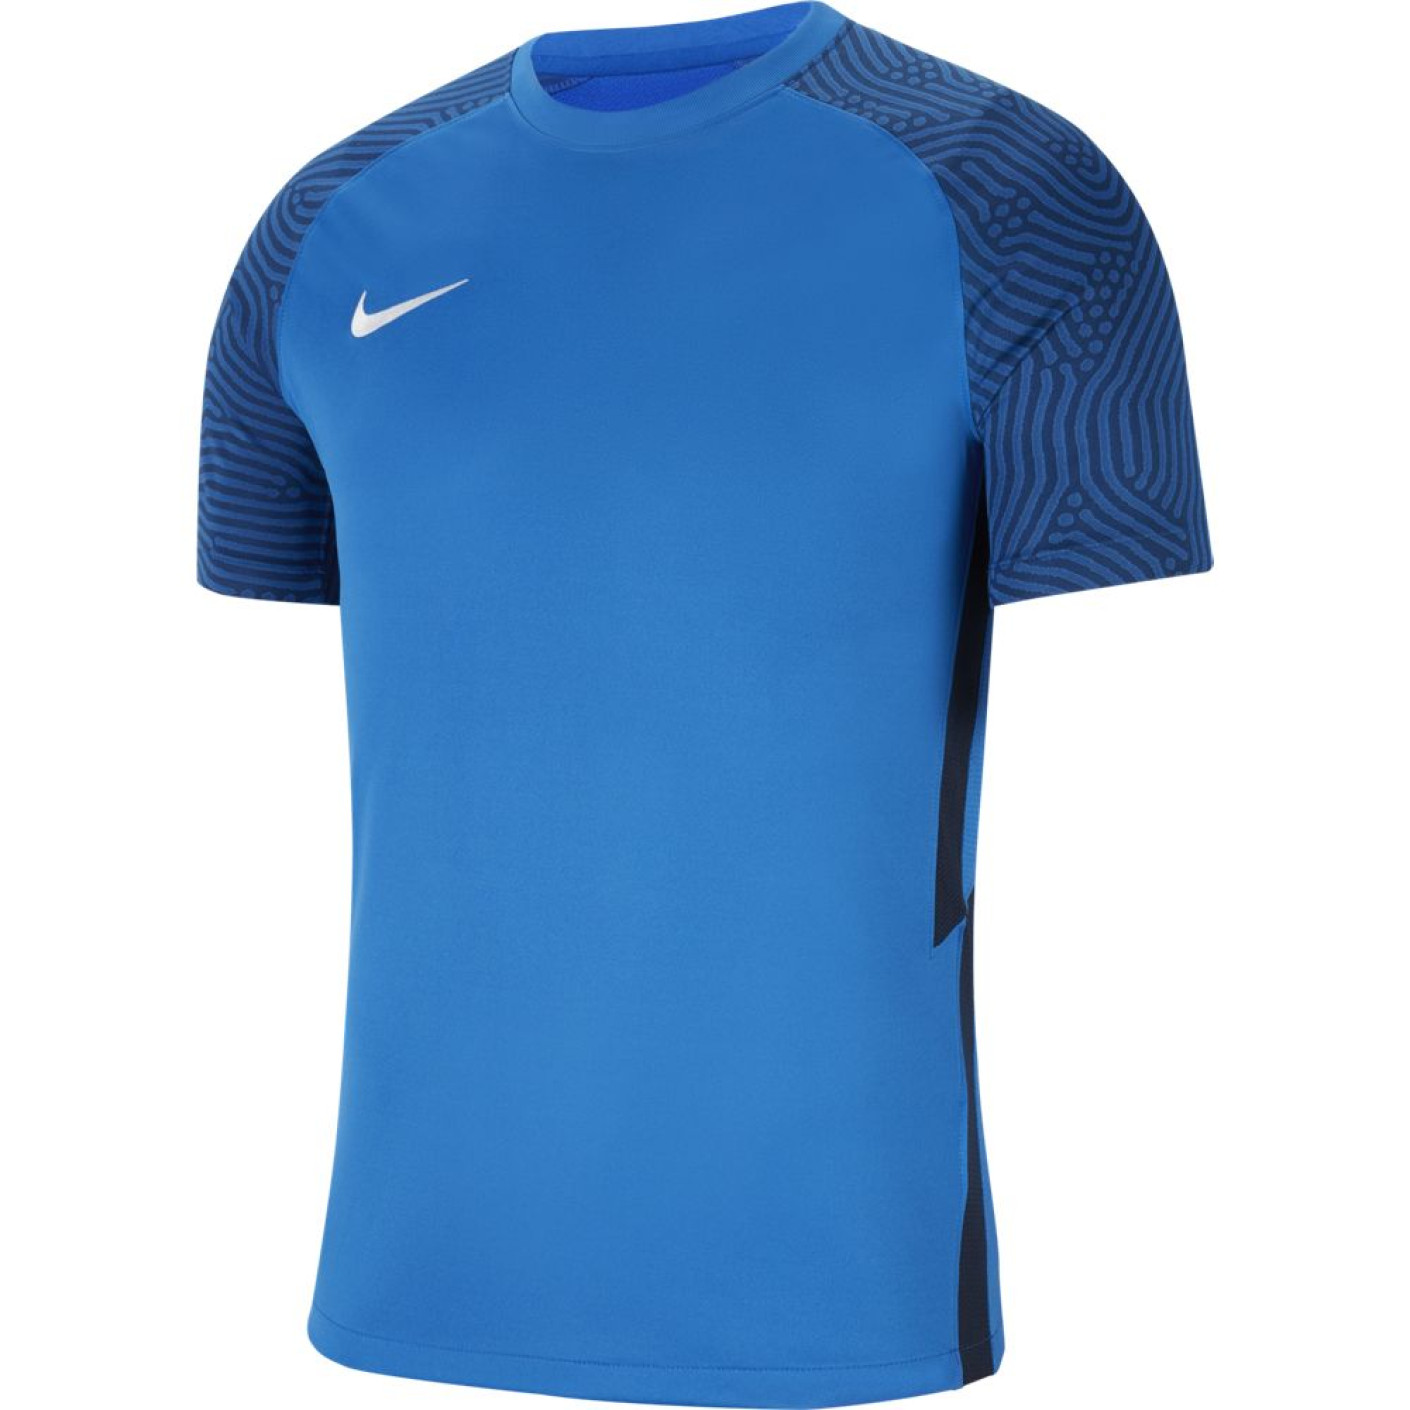 Maillot de football Nike Dri-Fit Strike II bleu royal